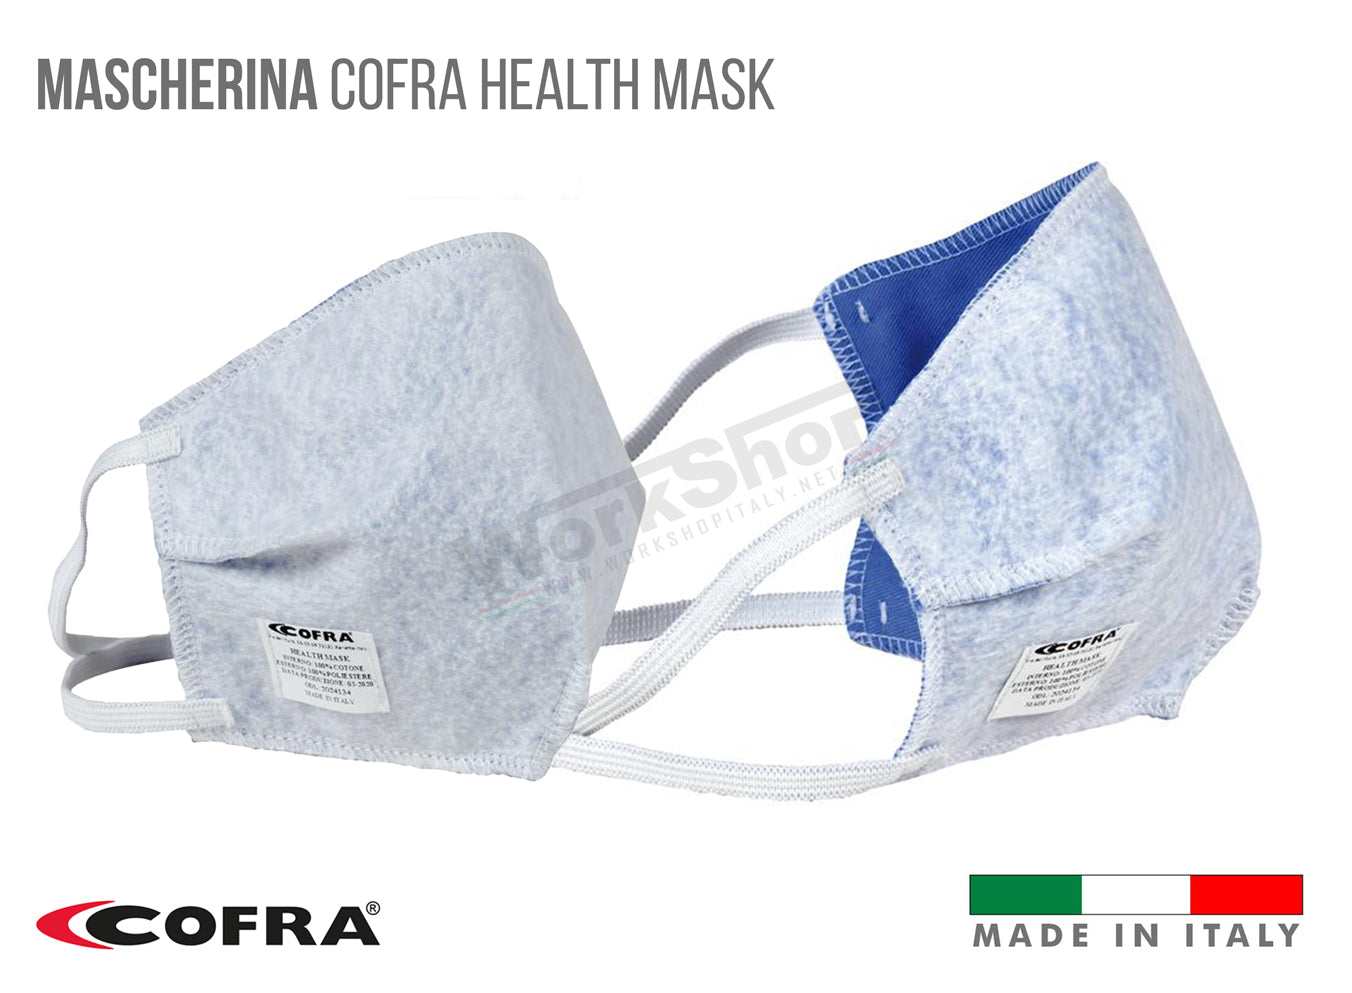 Mascherina Cofra M031 HEALTH MASK